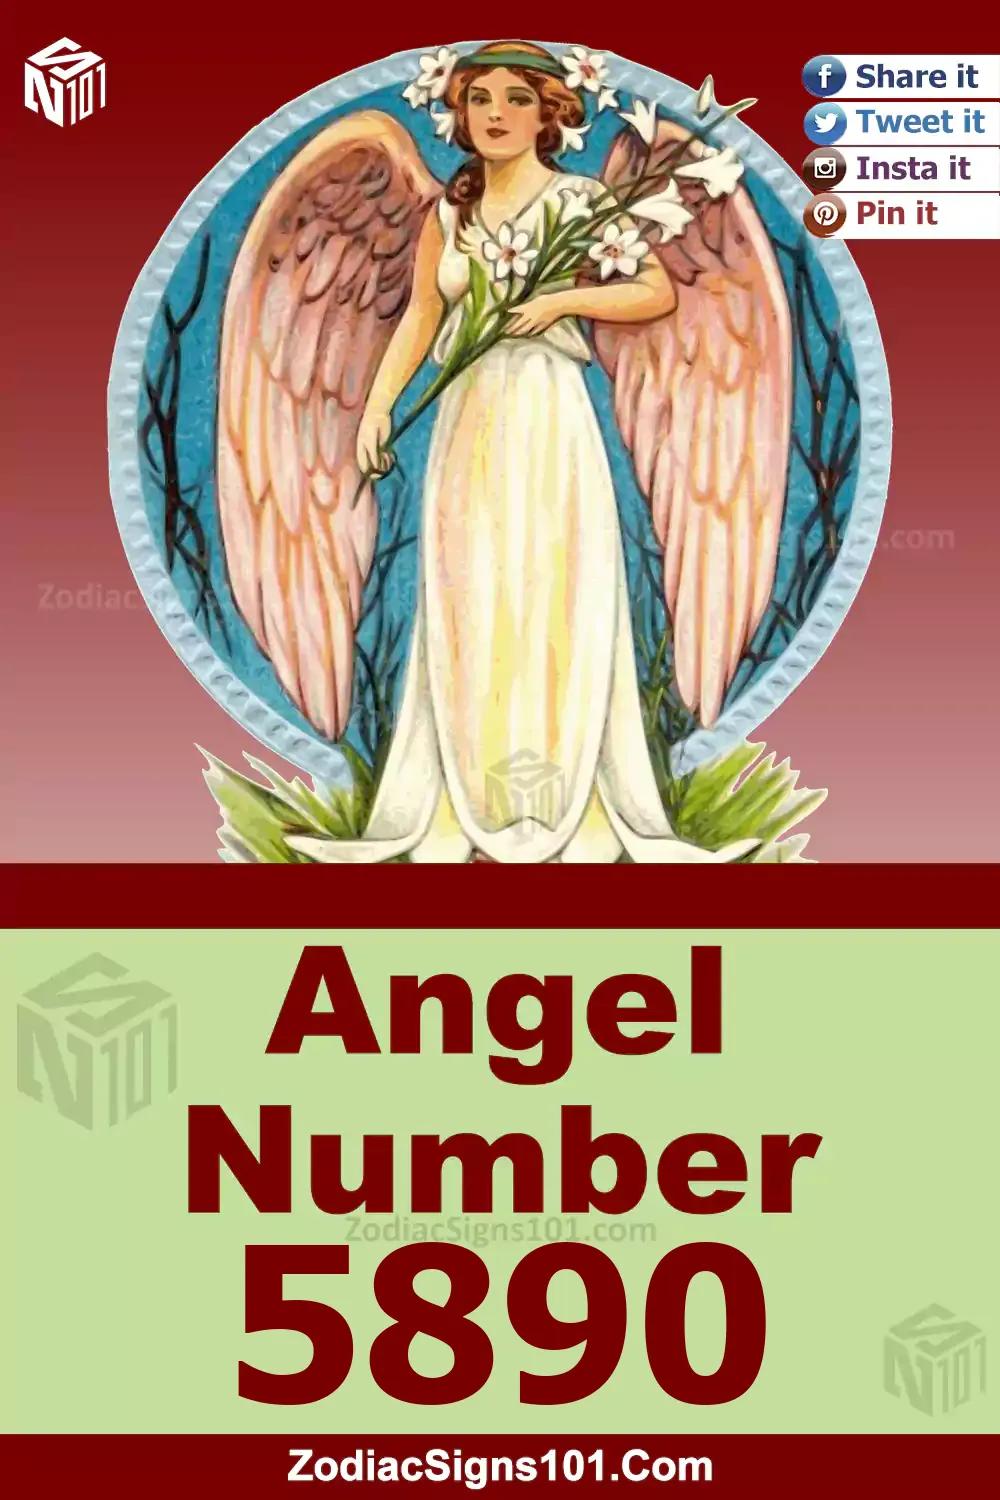 5890-Angel-Number-Meaning.jpg